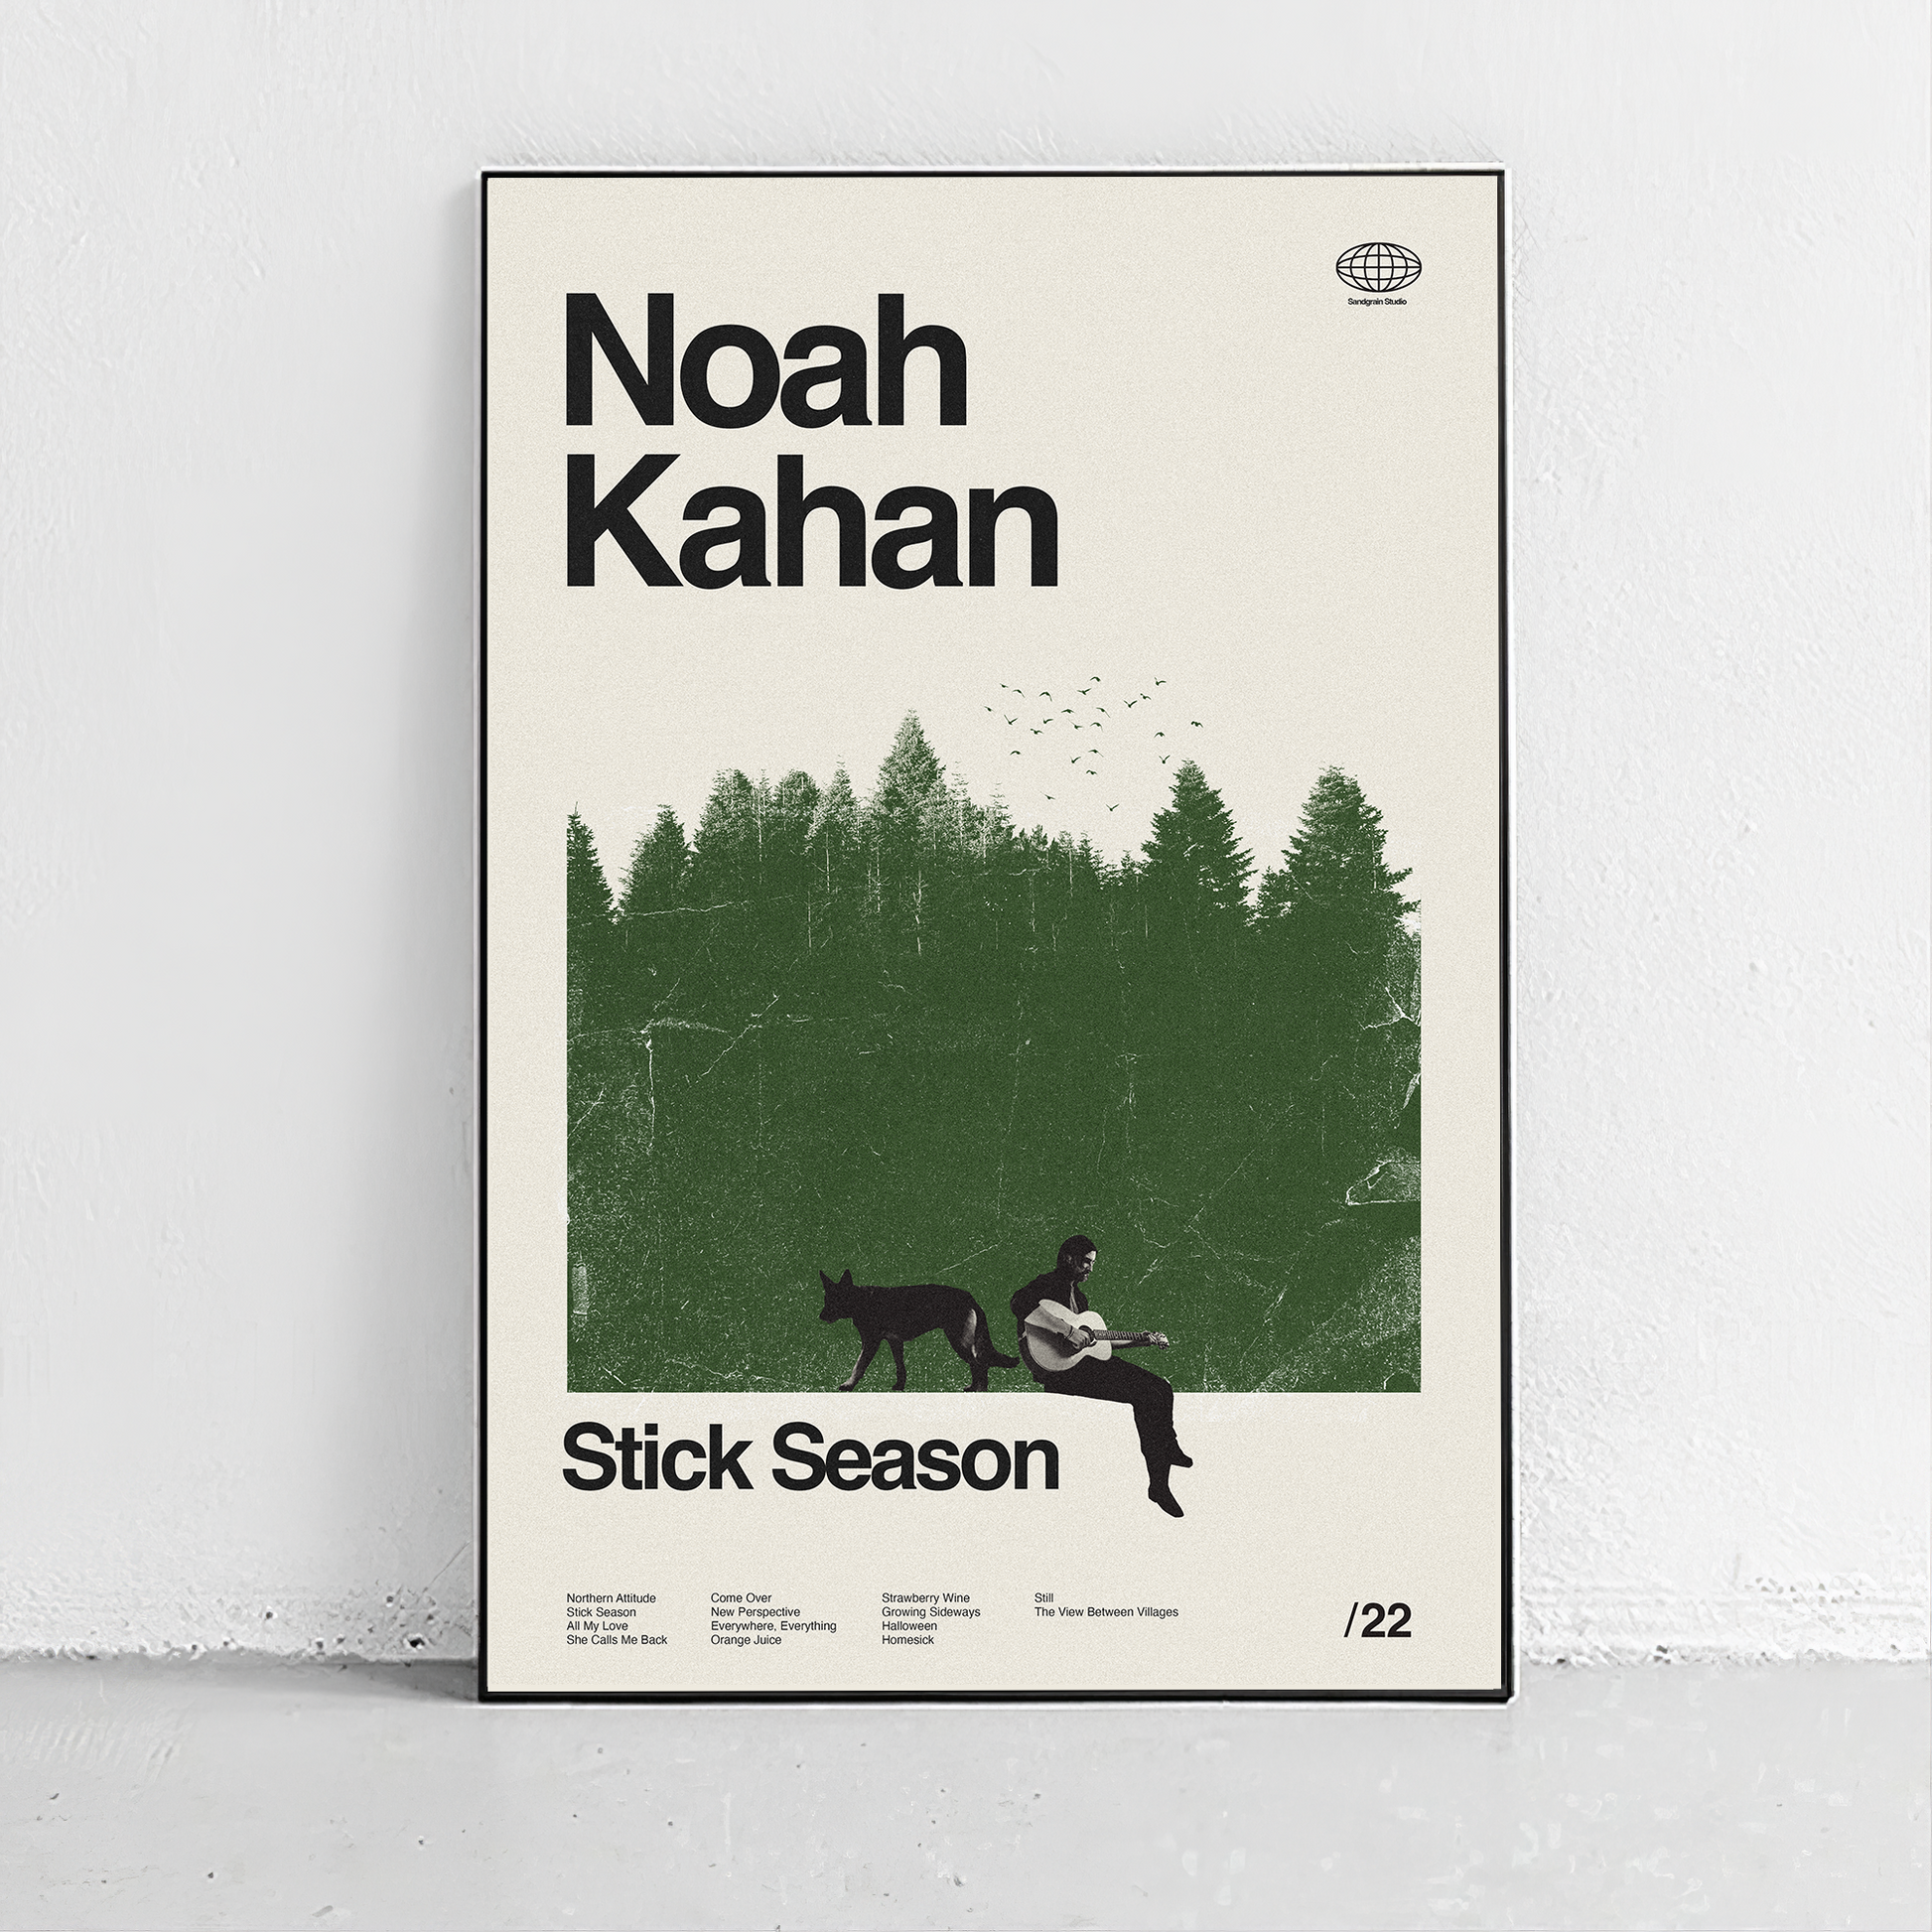 Noah Kahan on X: Also don't u worry sweeties stick season will